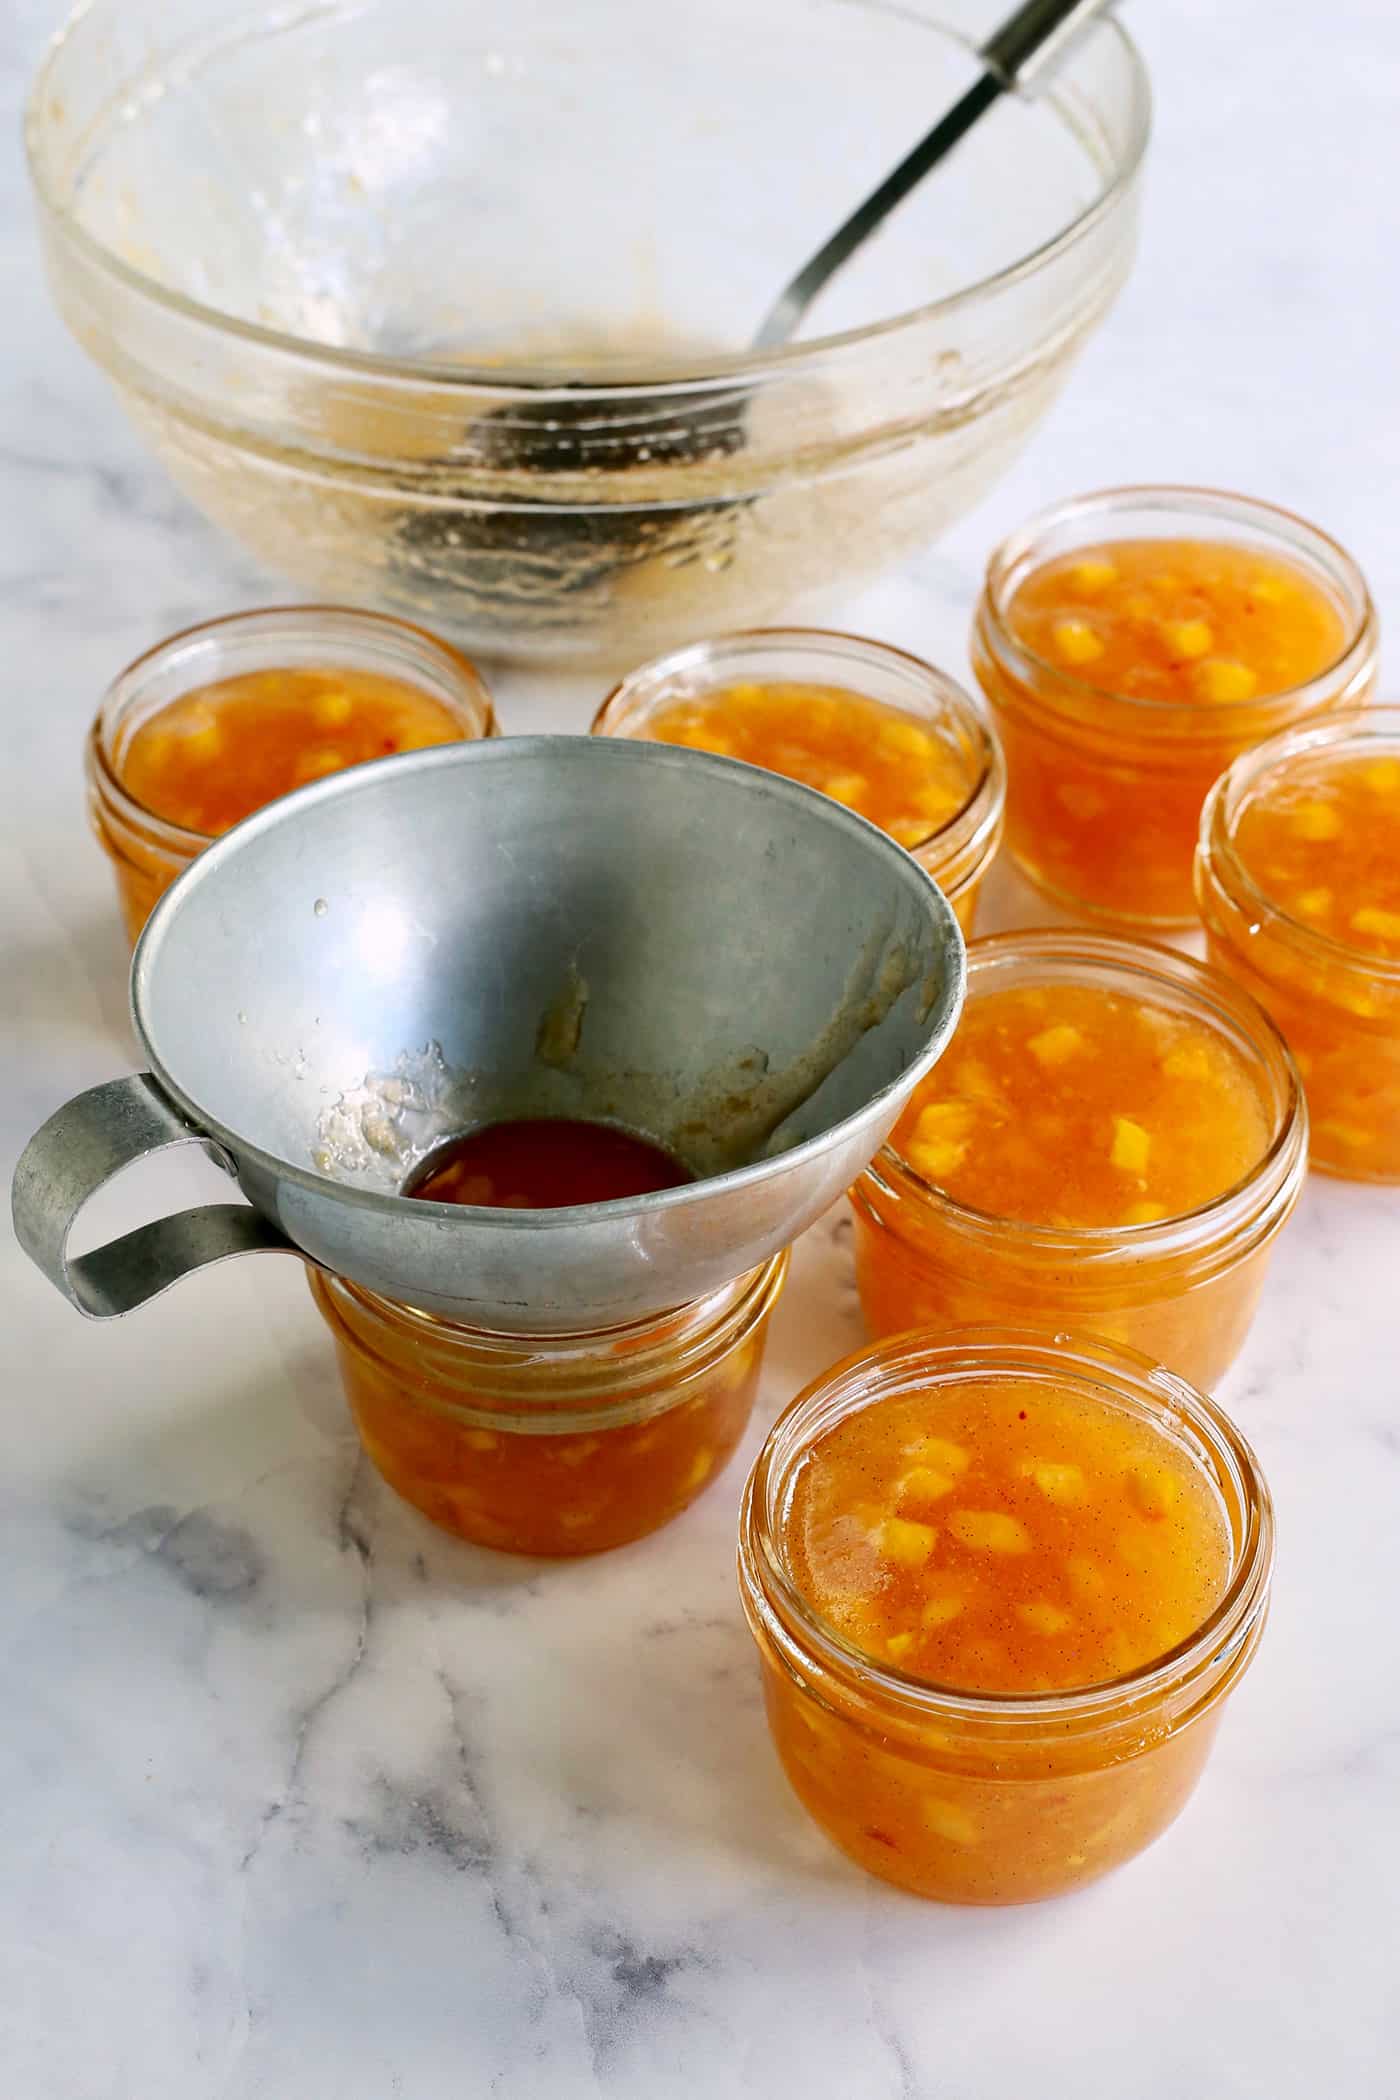 transferring peach jam mixture to individual canning jars